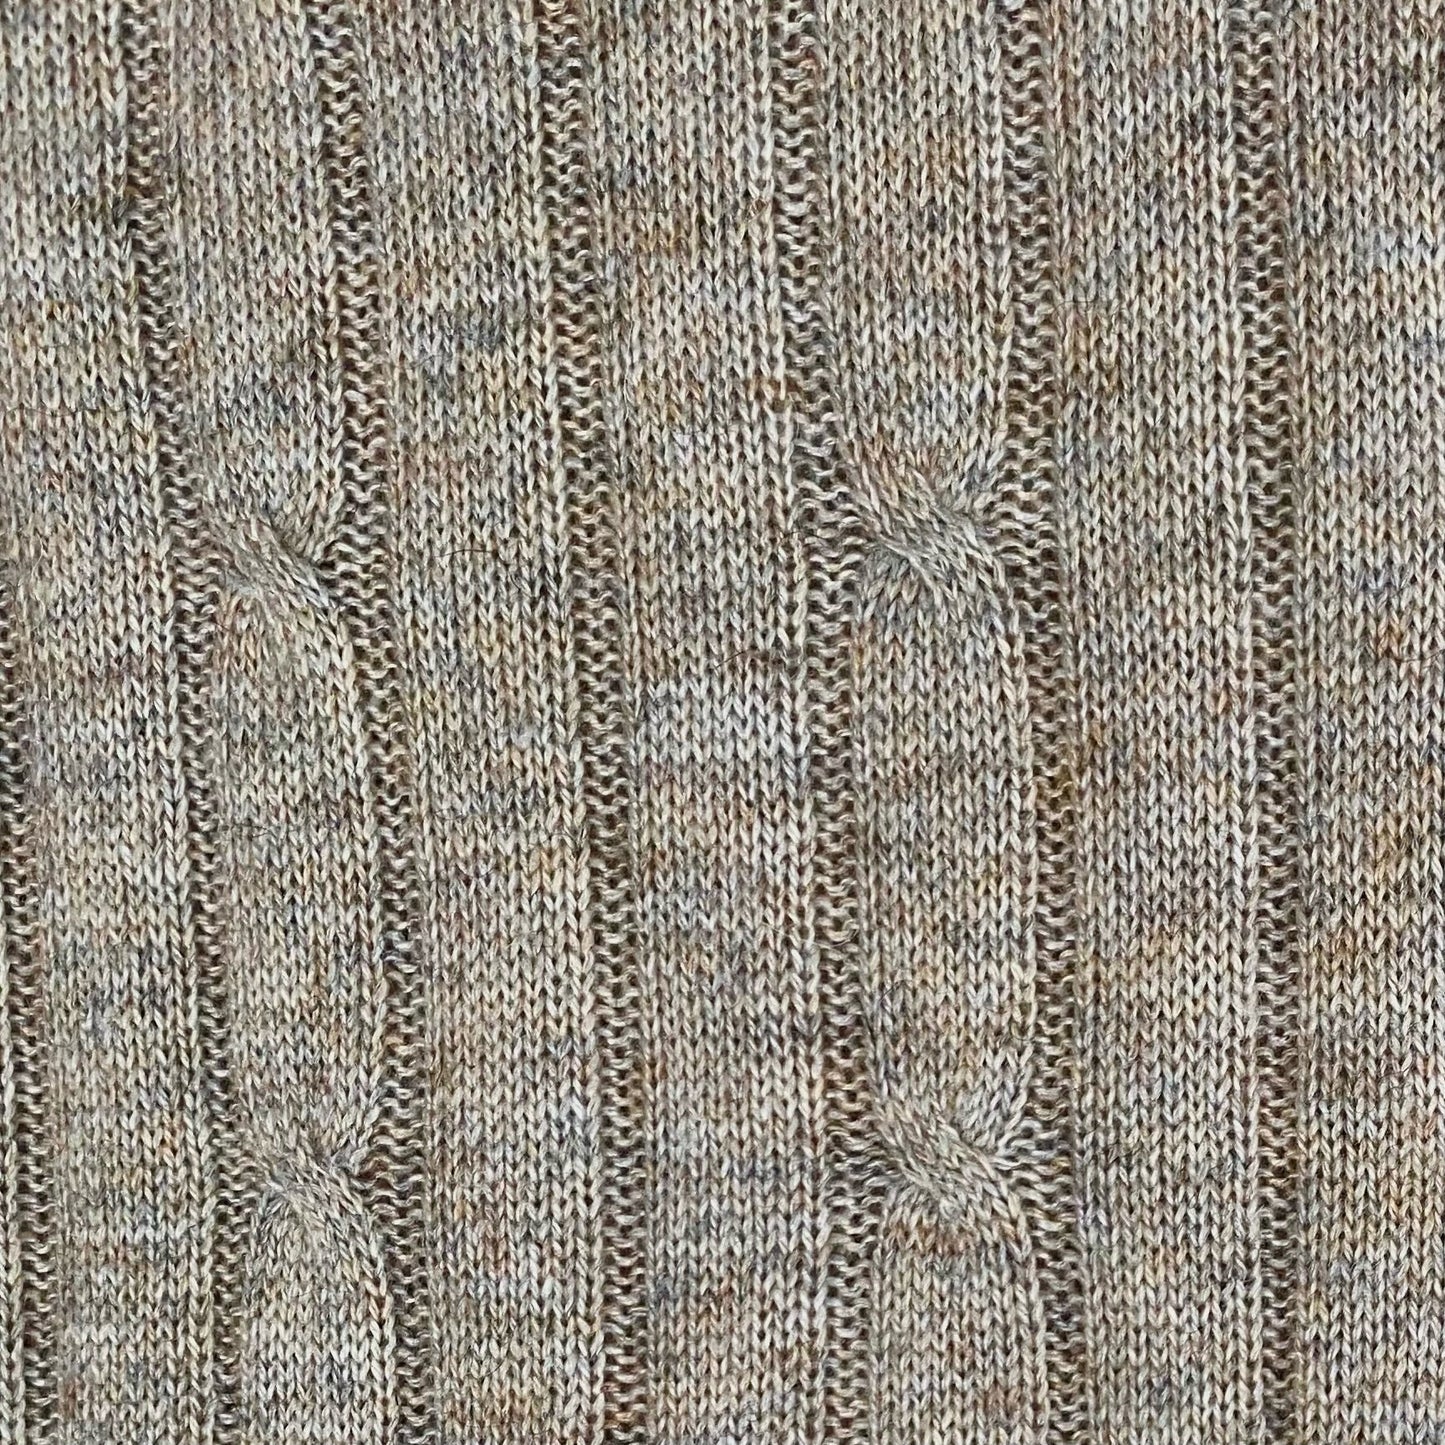 Warm Taupe Cable Knit Pashmina Signature Cashmere